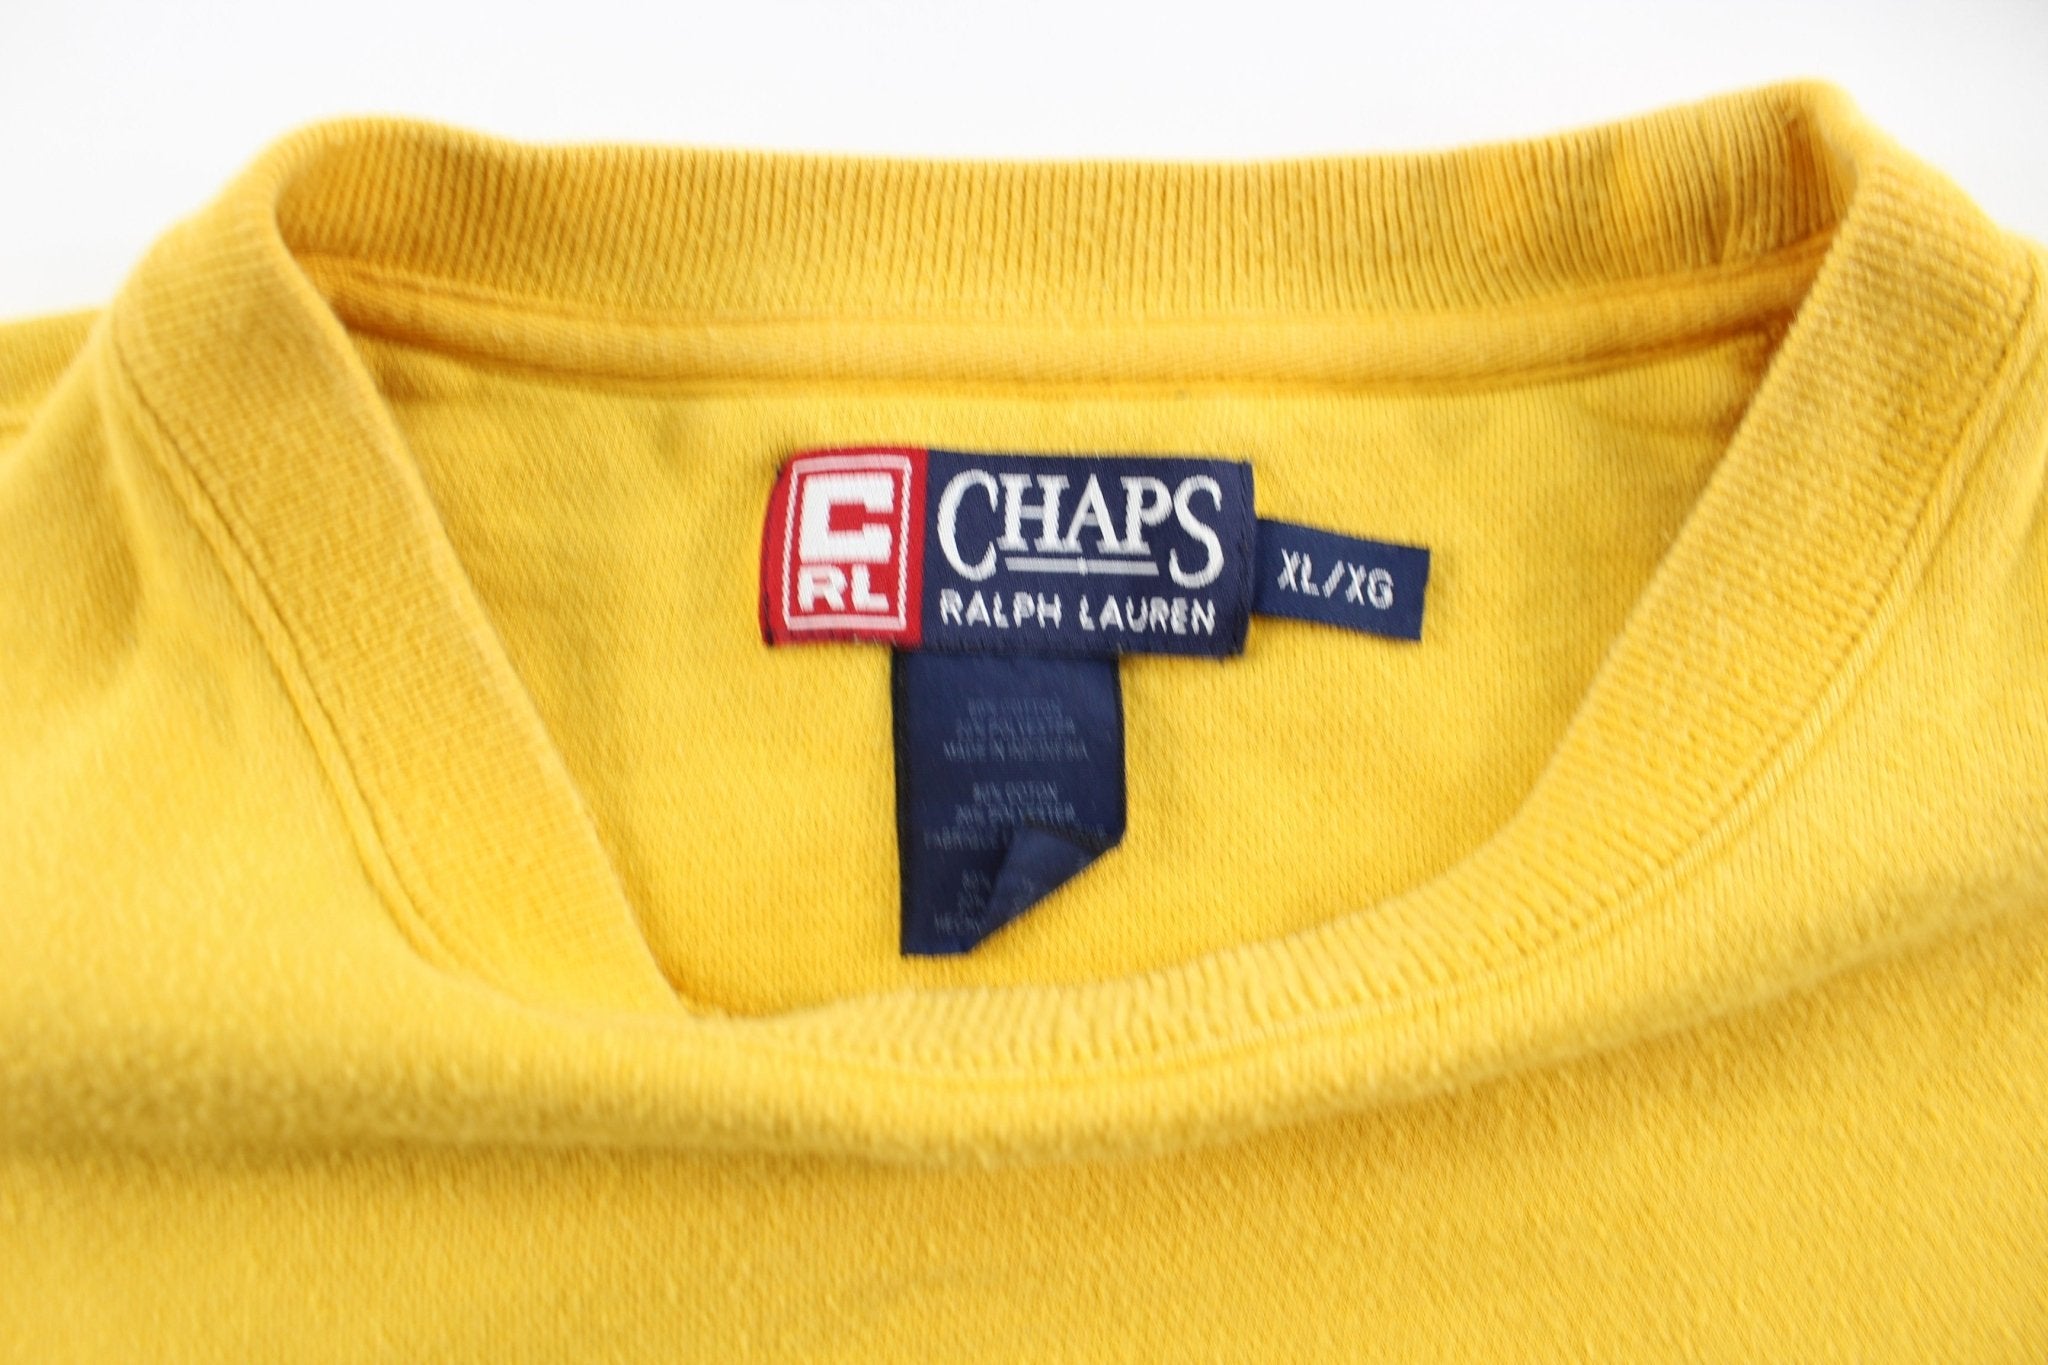 Chaps Ralph Lauren Embroidered USA Flag Sweatshirt